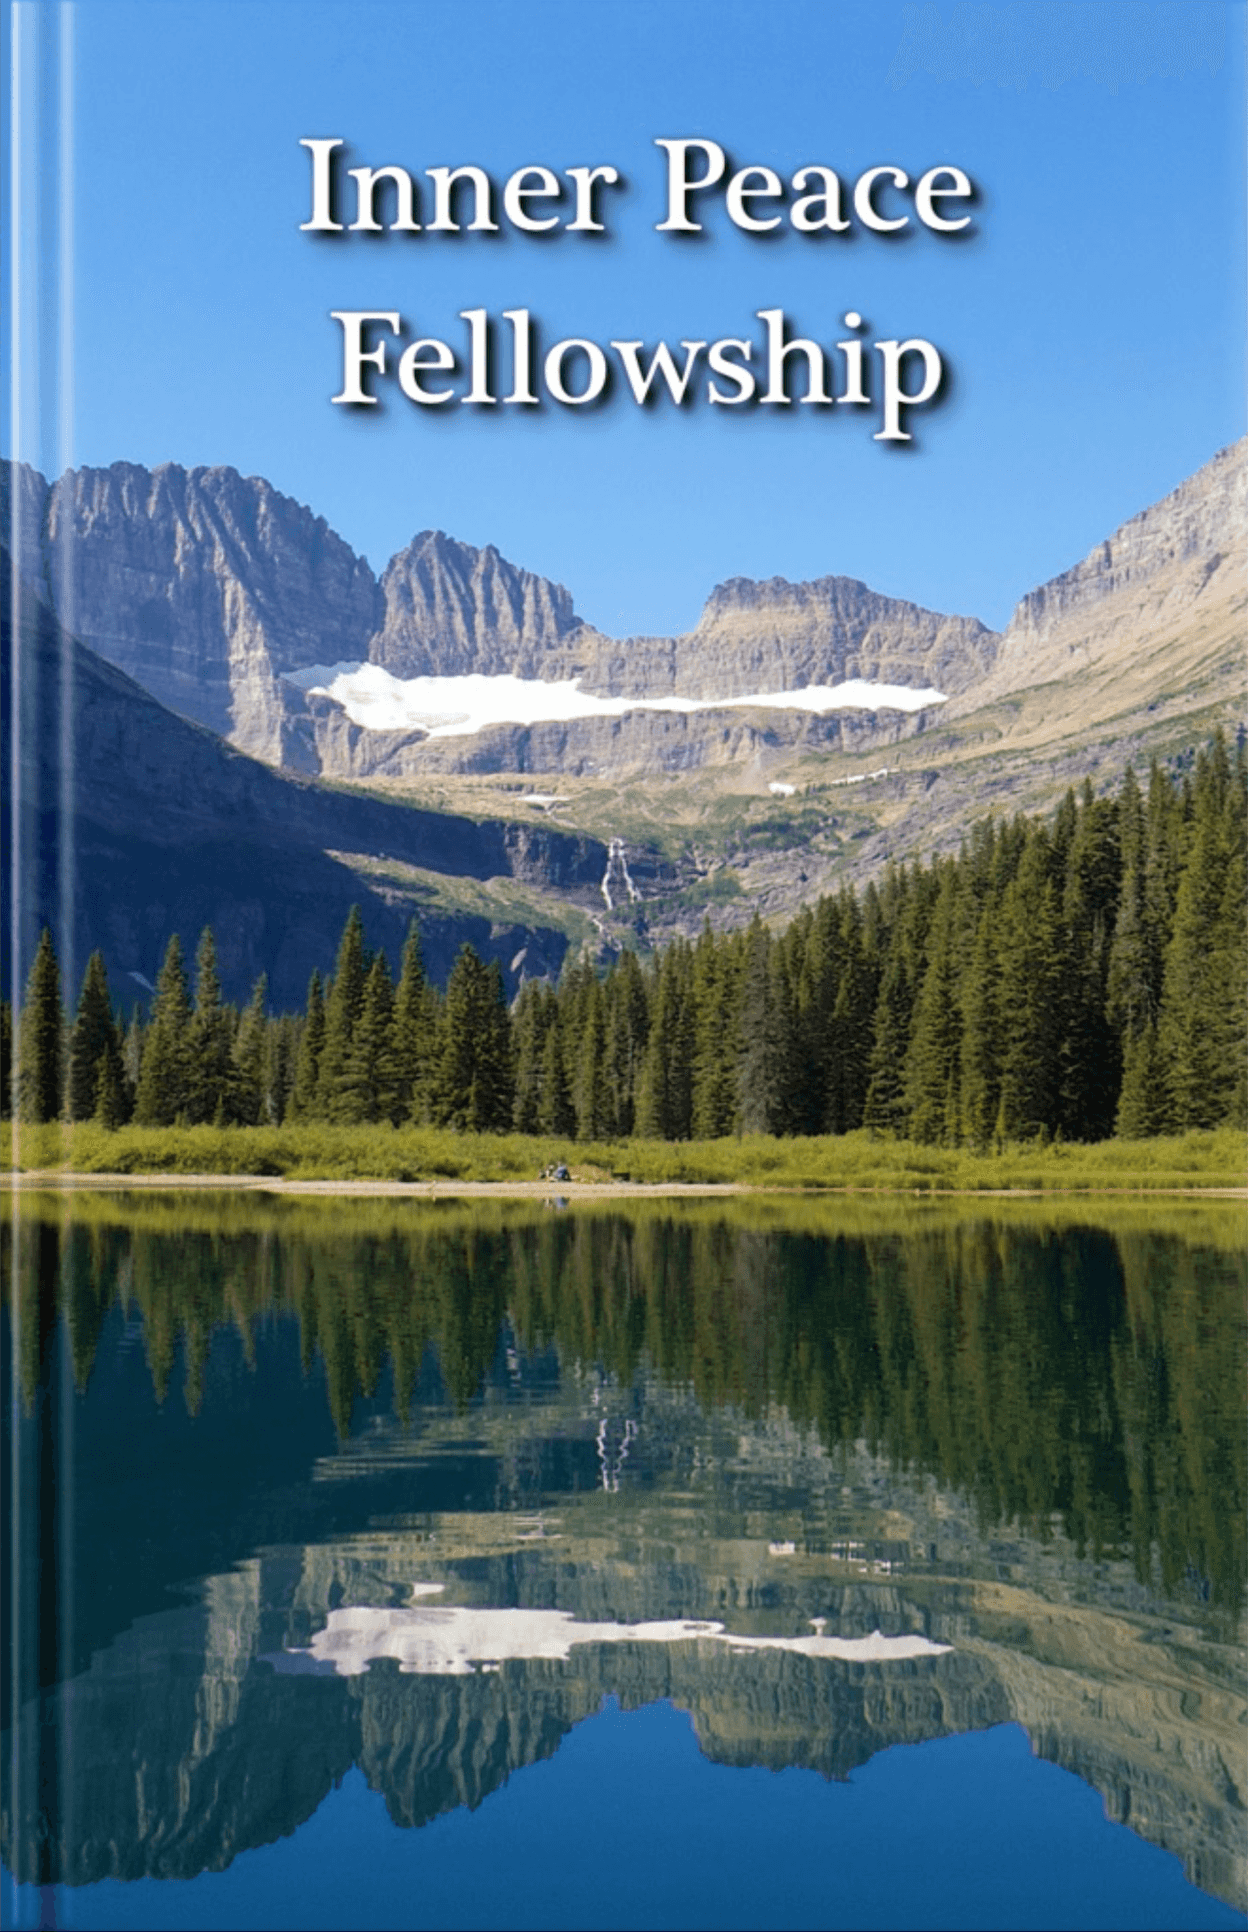 Inner Peace Fellowship eBook cover